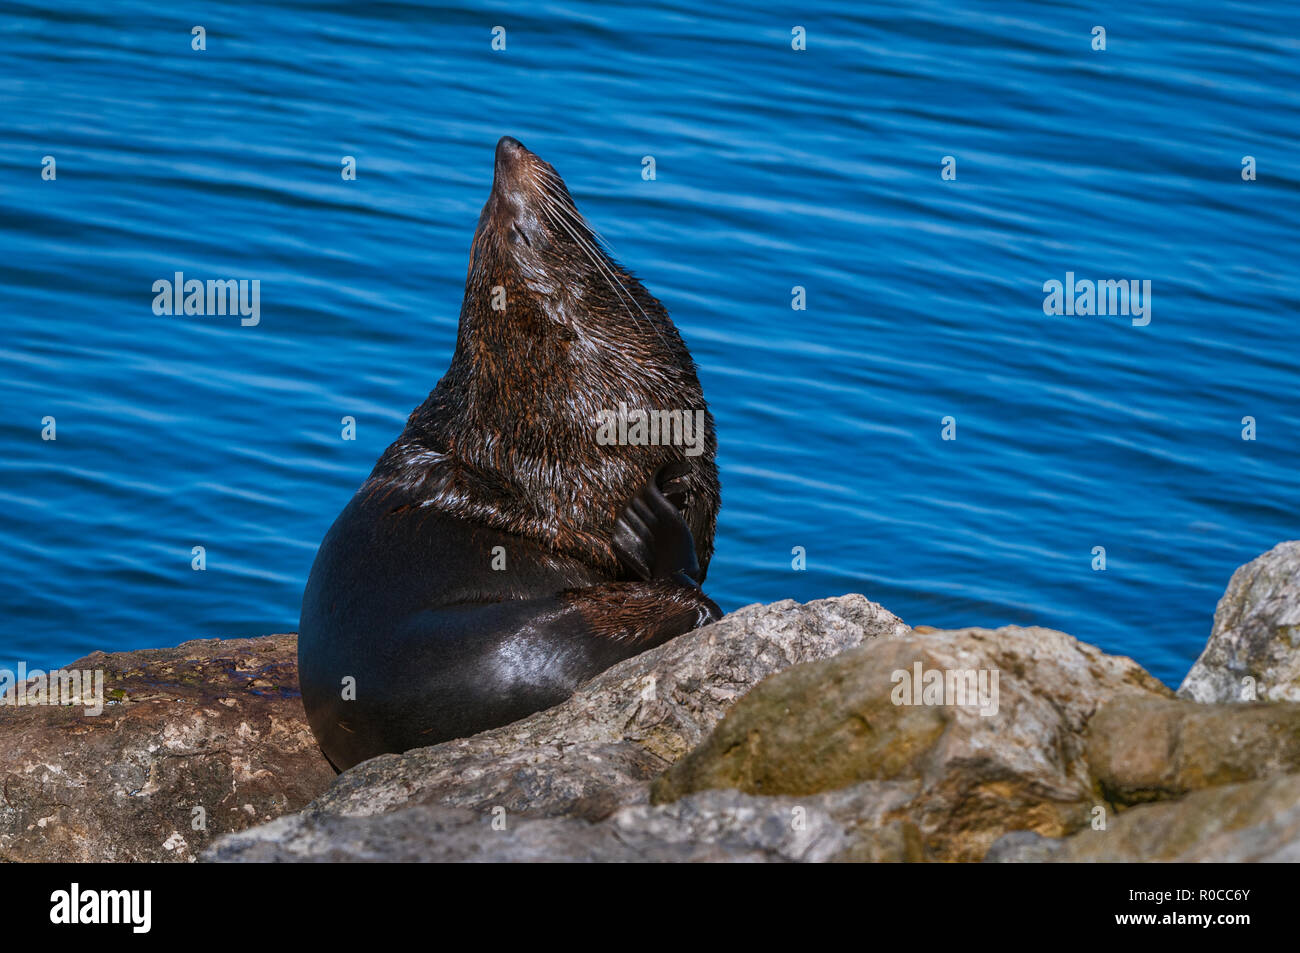 Furseal basking on rocks. Stock Photo